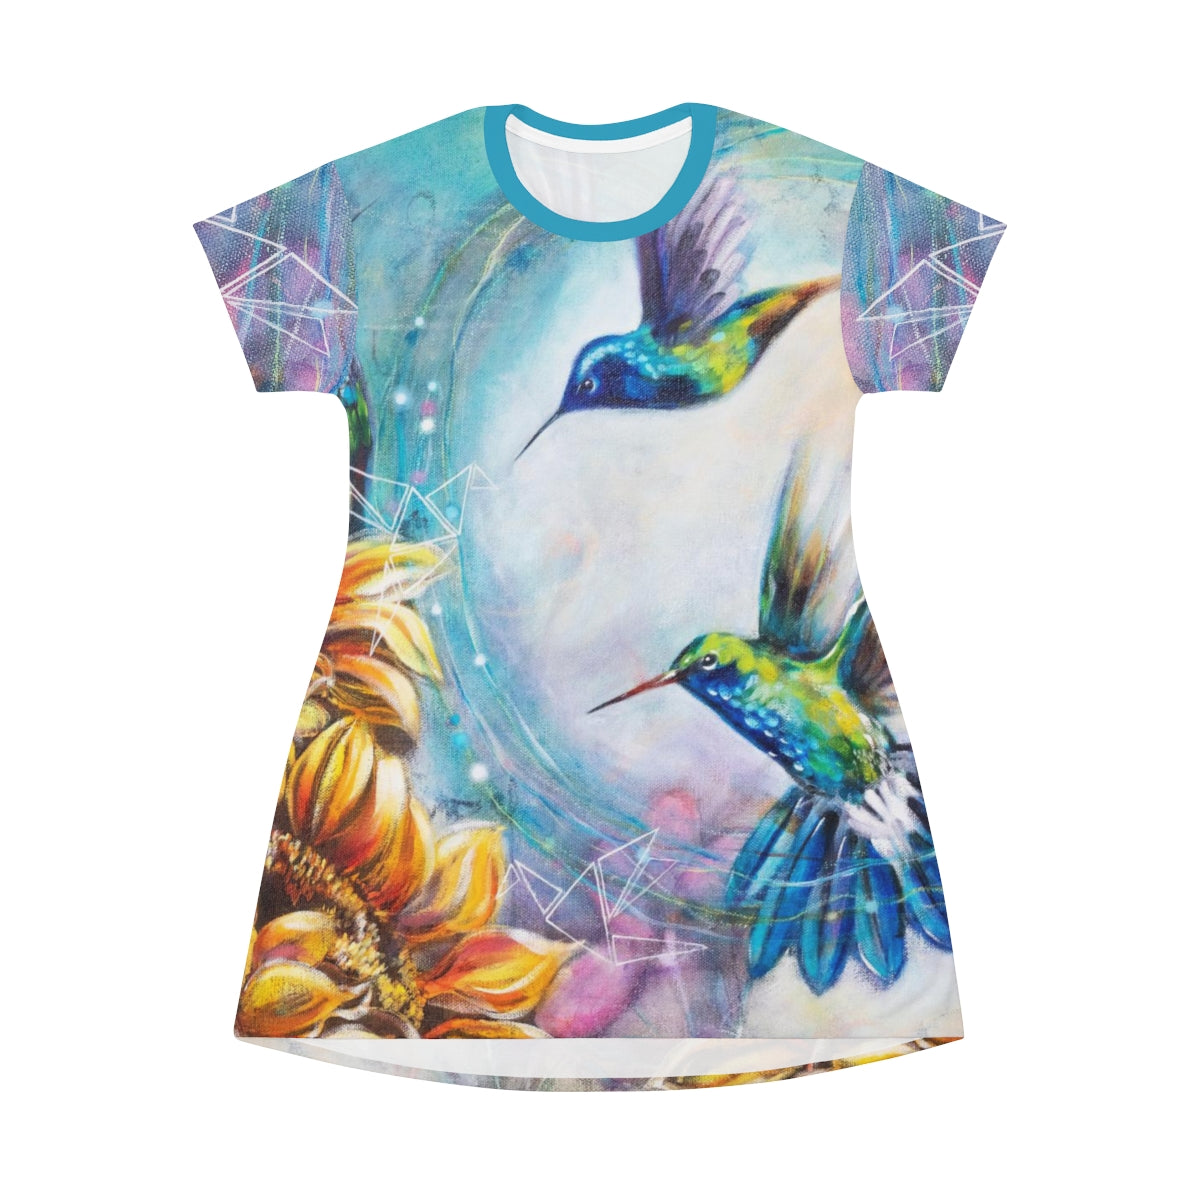 All Over Print T-Shirt Dress - Humming birds